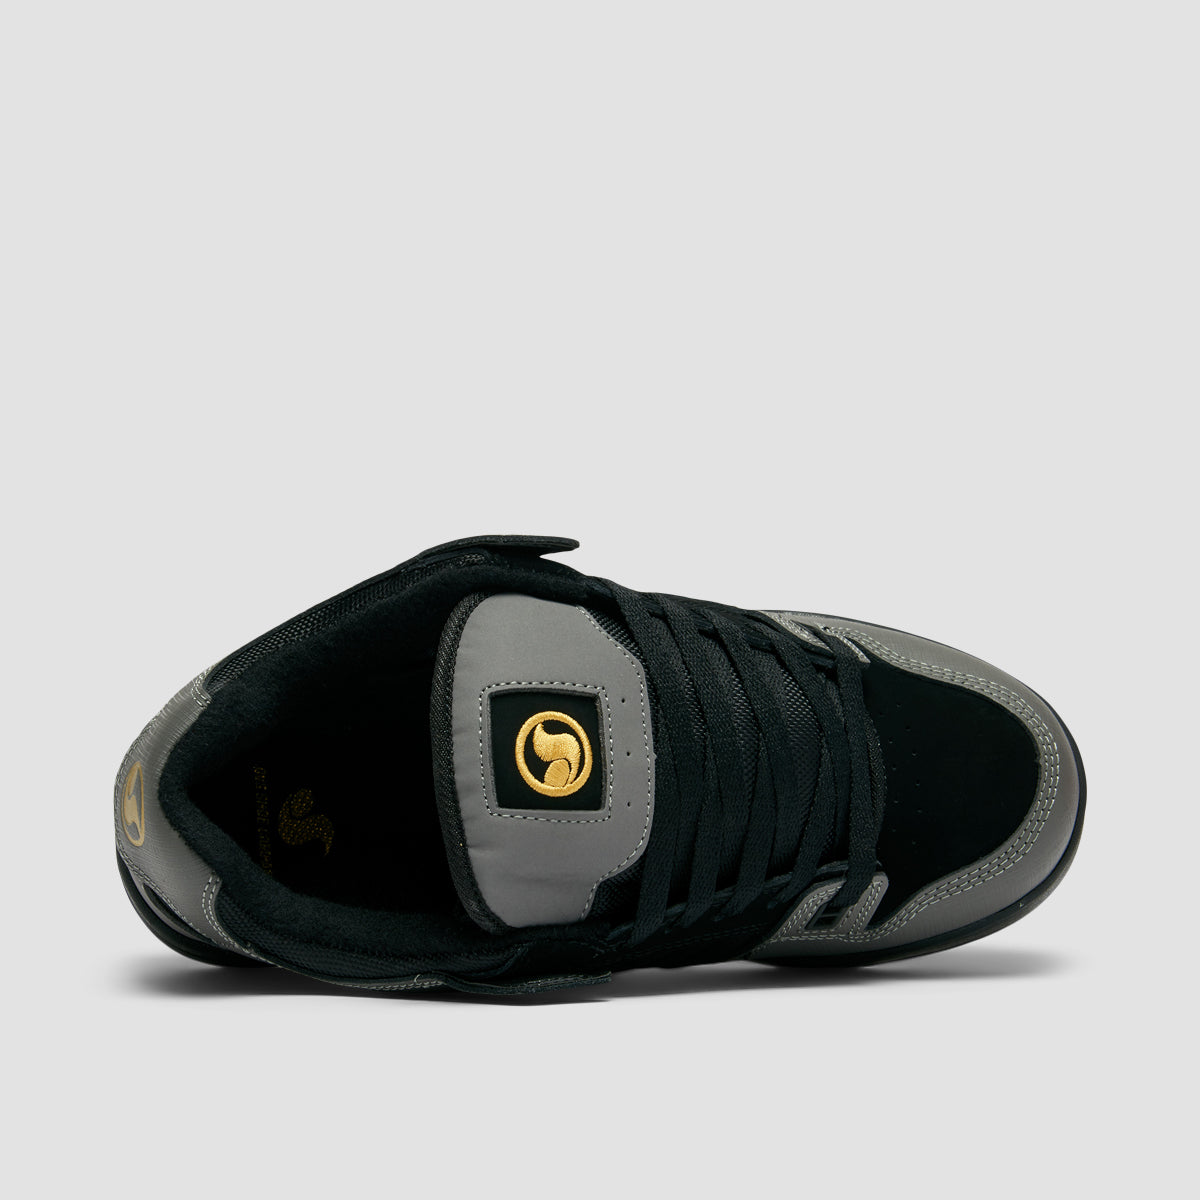 DVS Militia Shoes - Charcoal/Black/Gold Nubuck